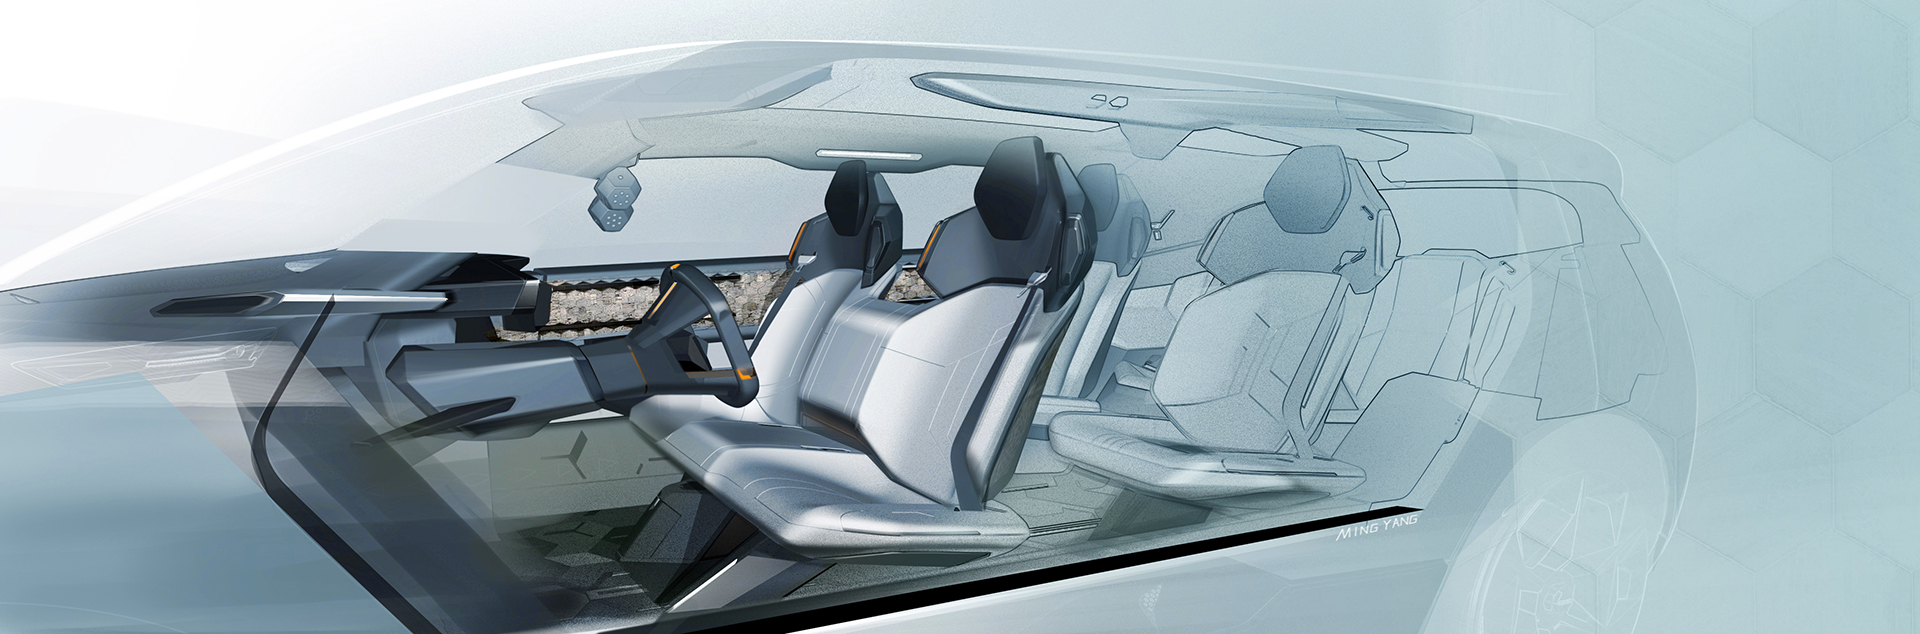 GAC ENTRANZE EV Concept, 2019 - Deign Sketch - Interior